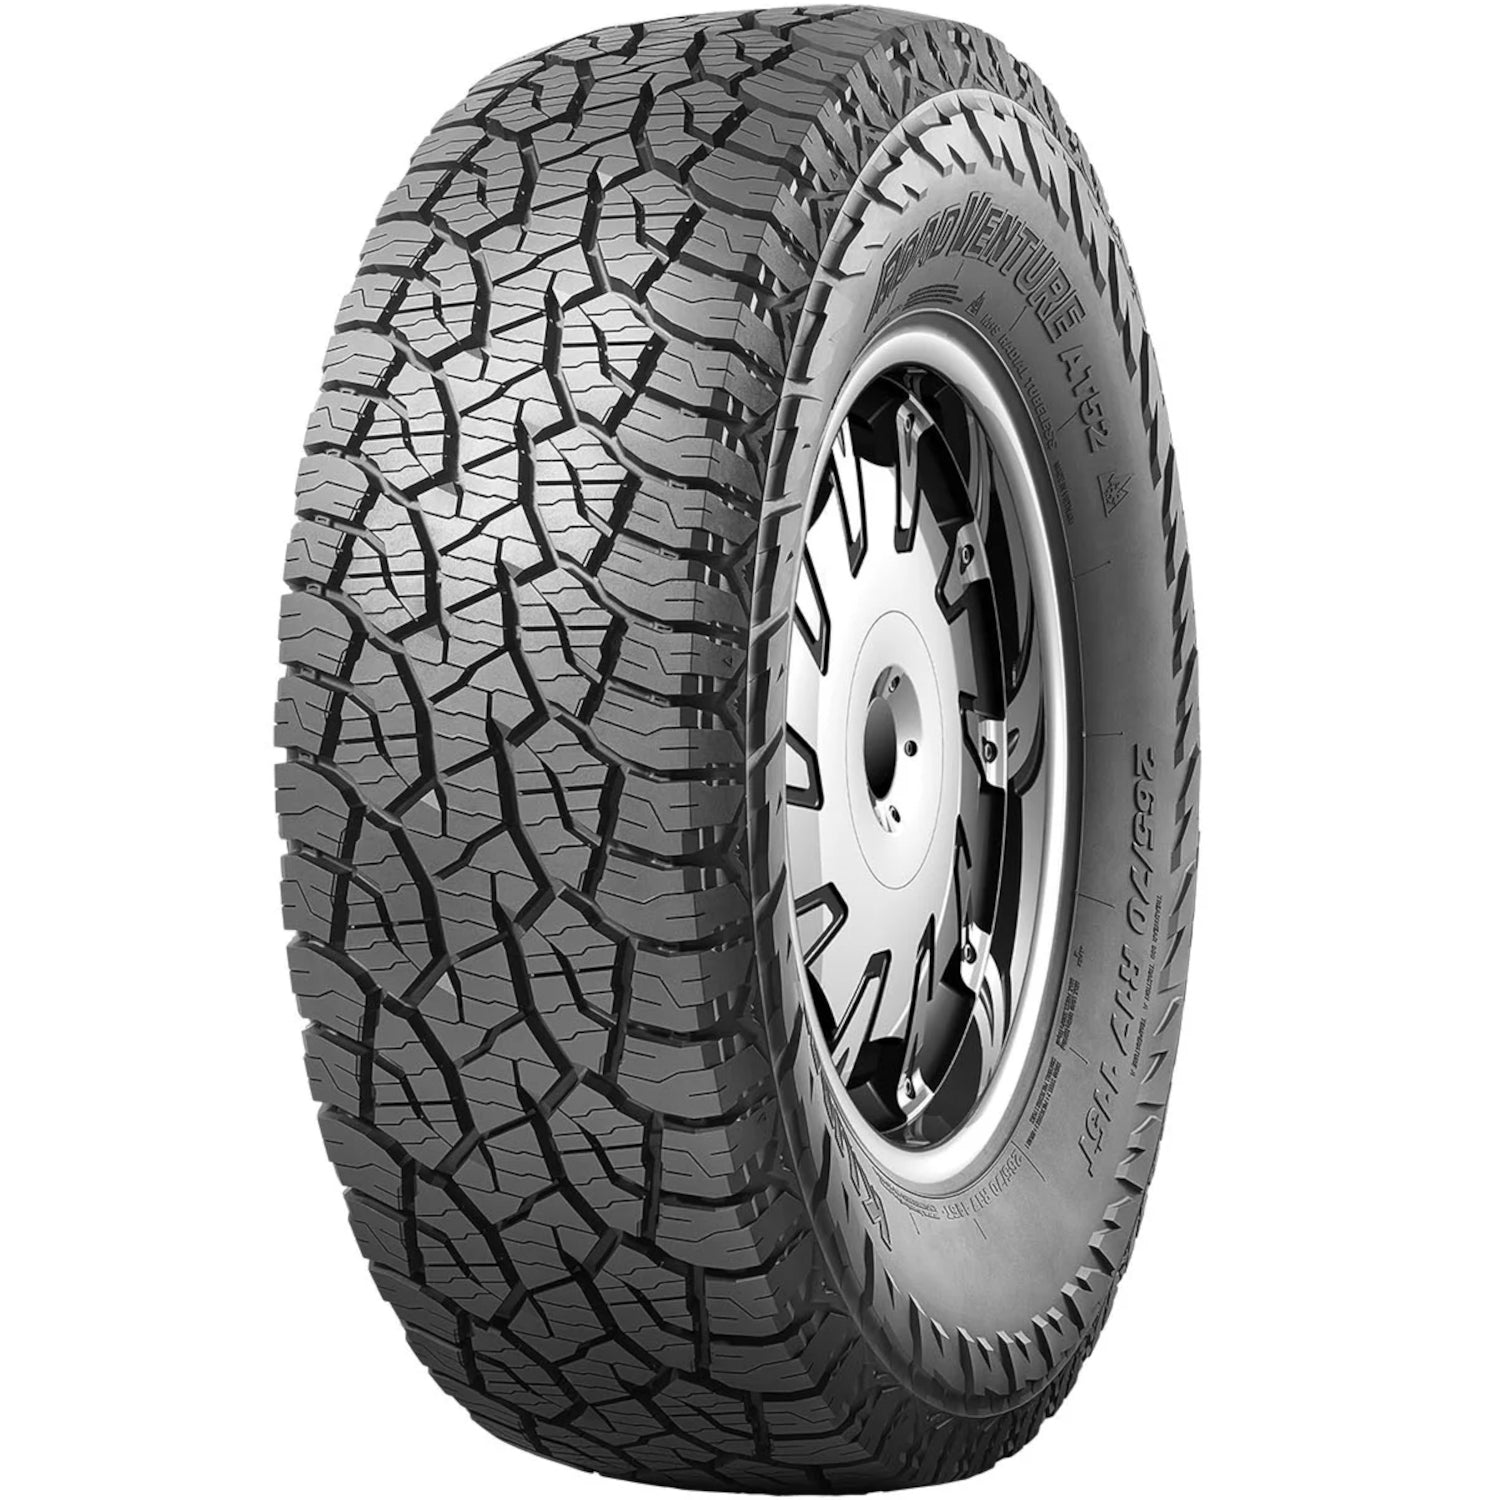 KUMHO ROAD VENTURE AT52 LT235/75R15 (28.9X9.3R 15) Tires